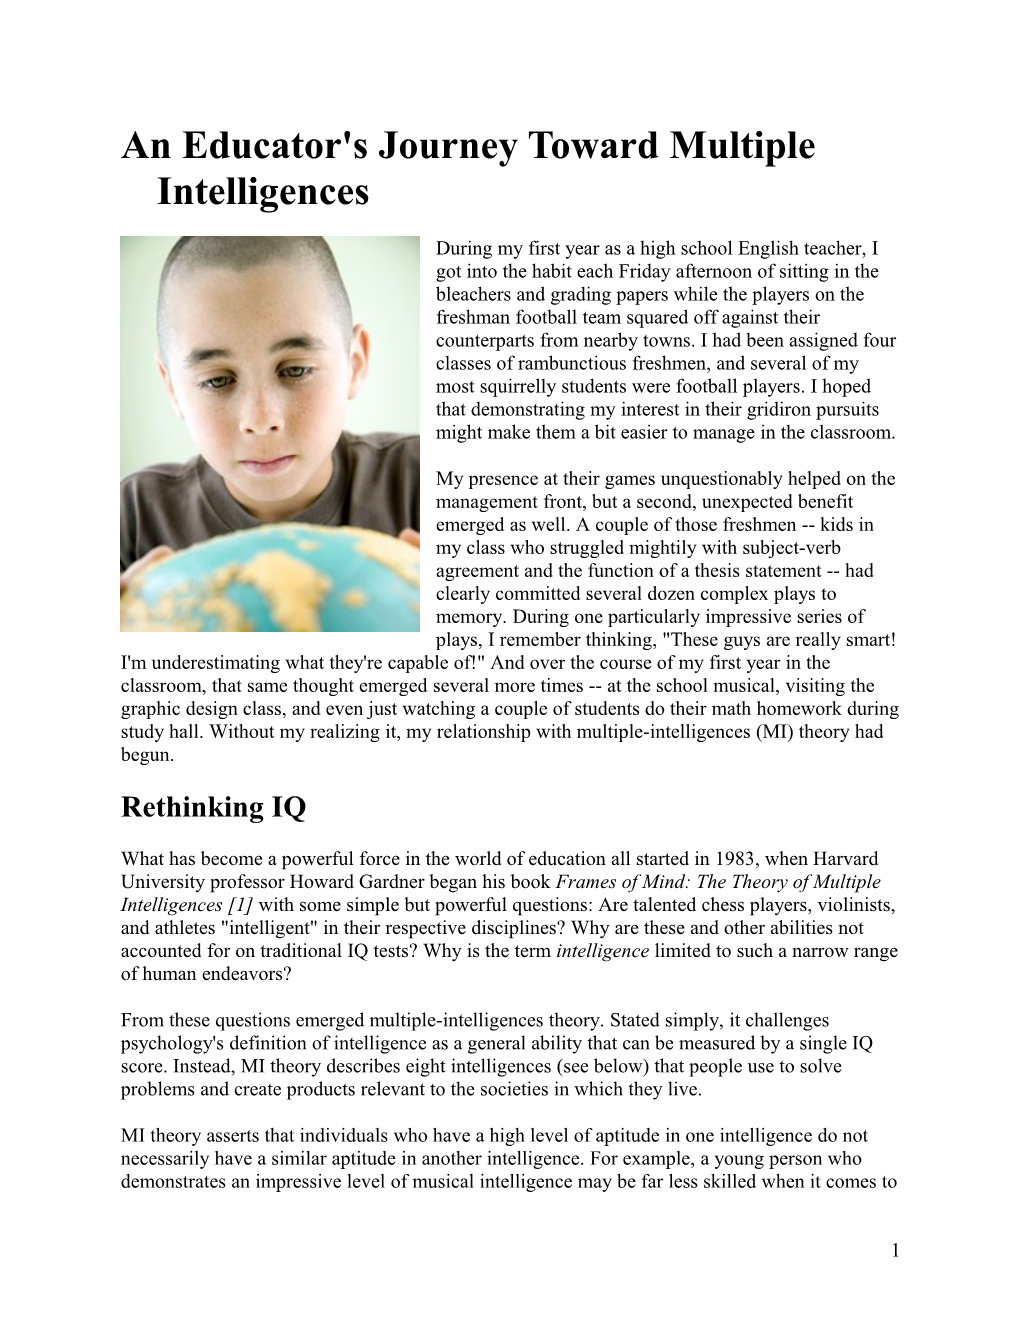 An Educator's Journey Toward Multiple Intelligences